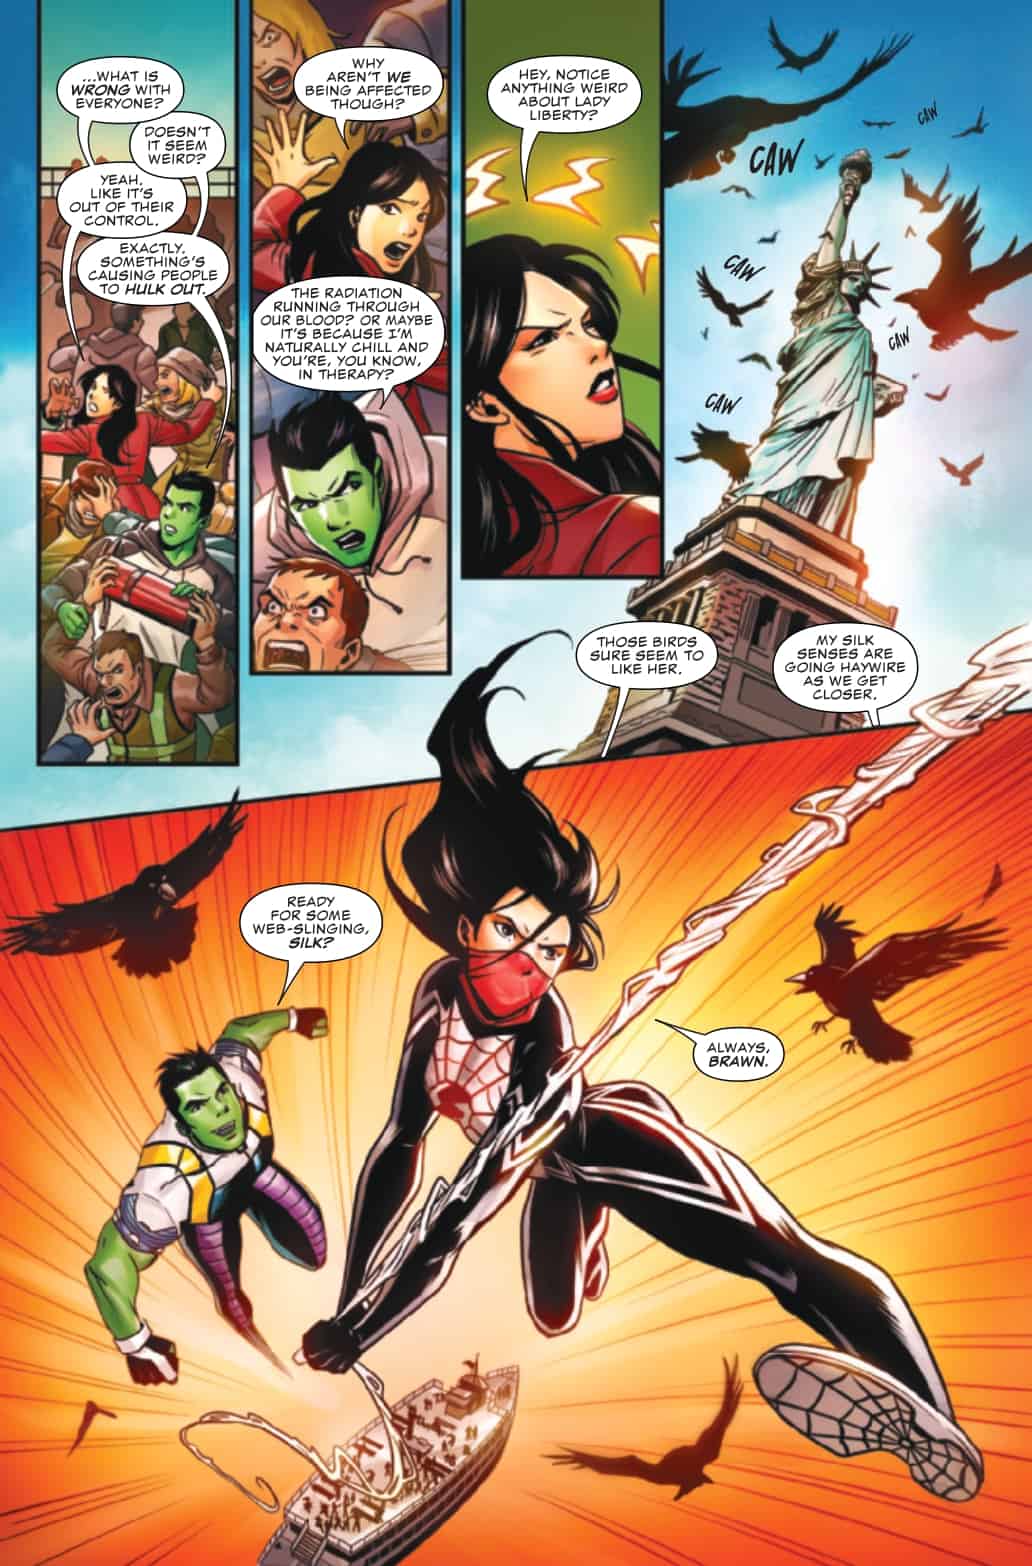 SNEAK PEEK: Preview Marvel Comics' MARVEL VOICES IDENTITY #1 - Comic Watch